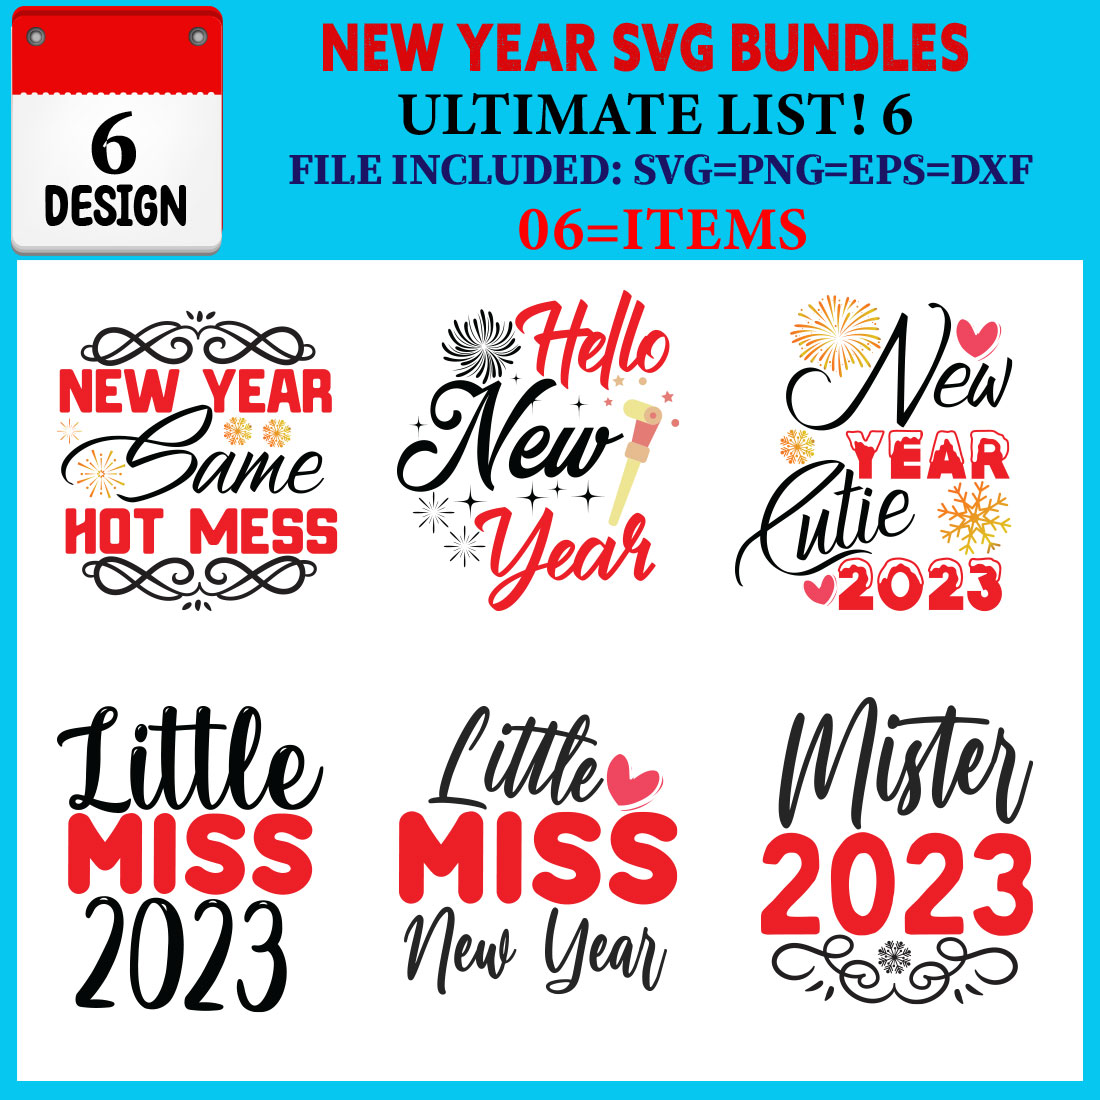 New Year T-shirt Design Bundle Vol-05 cover image.